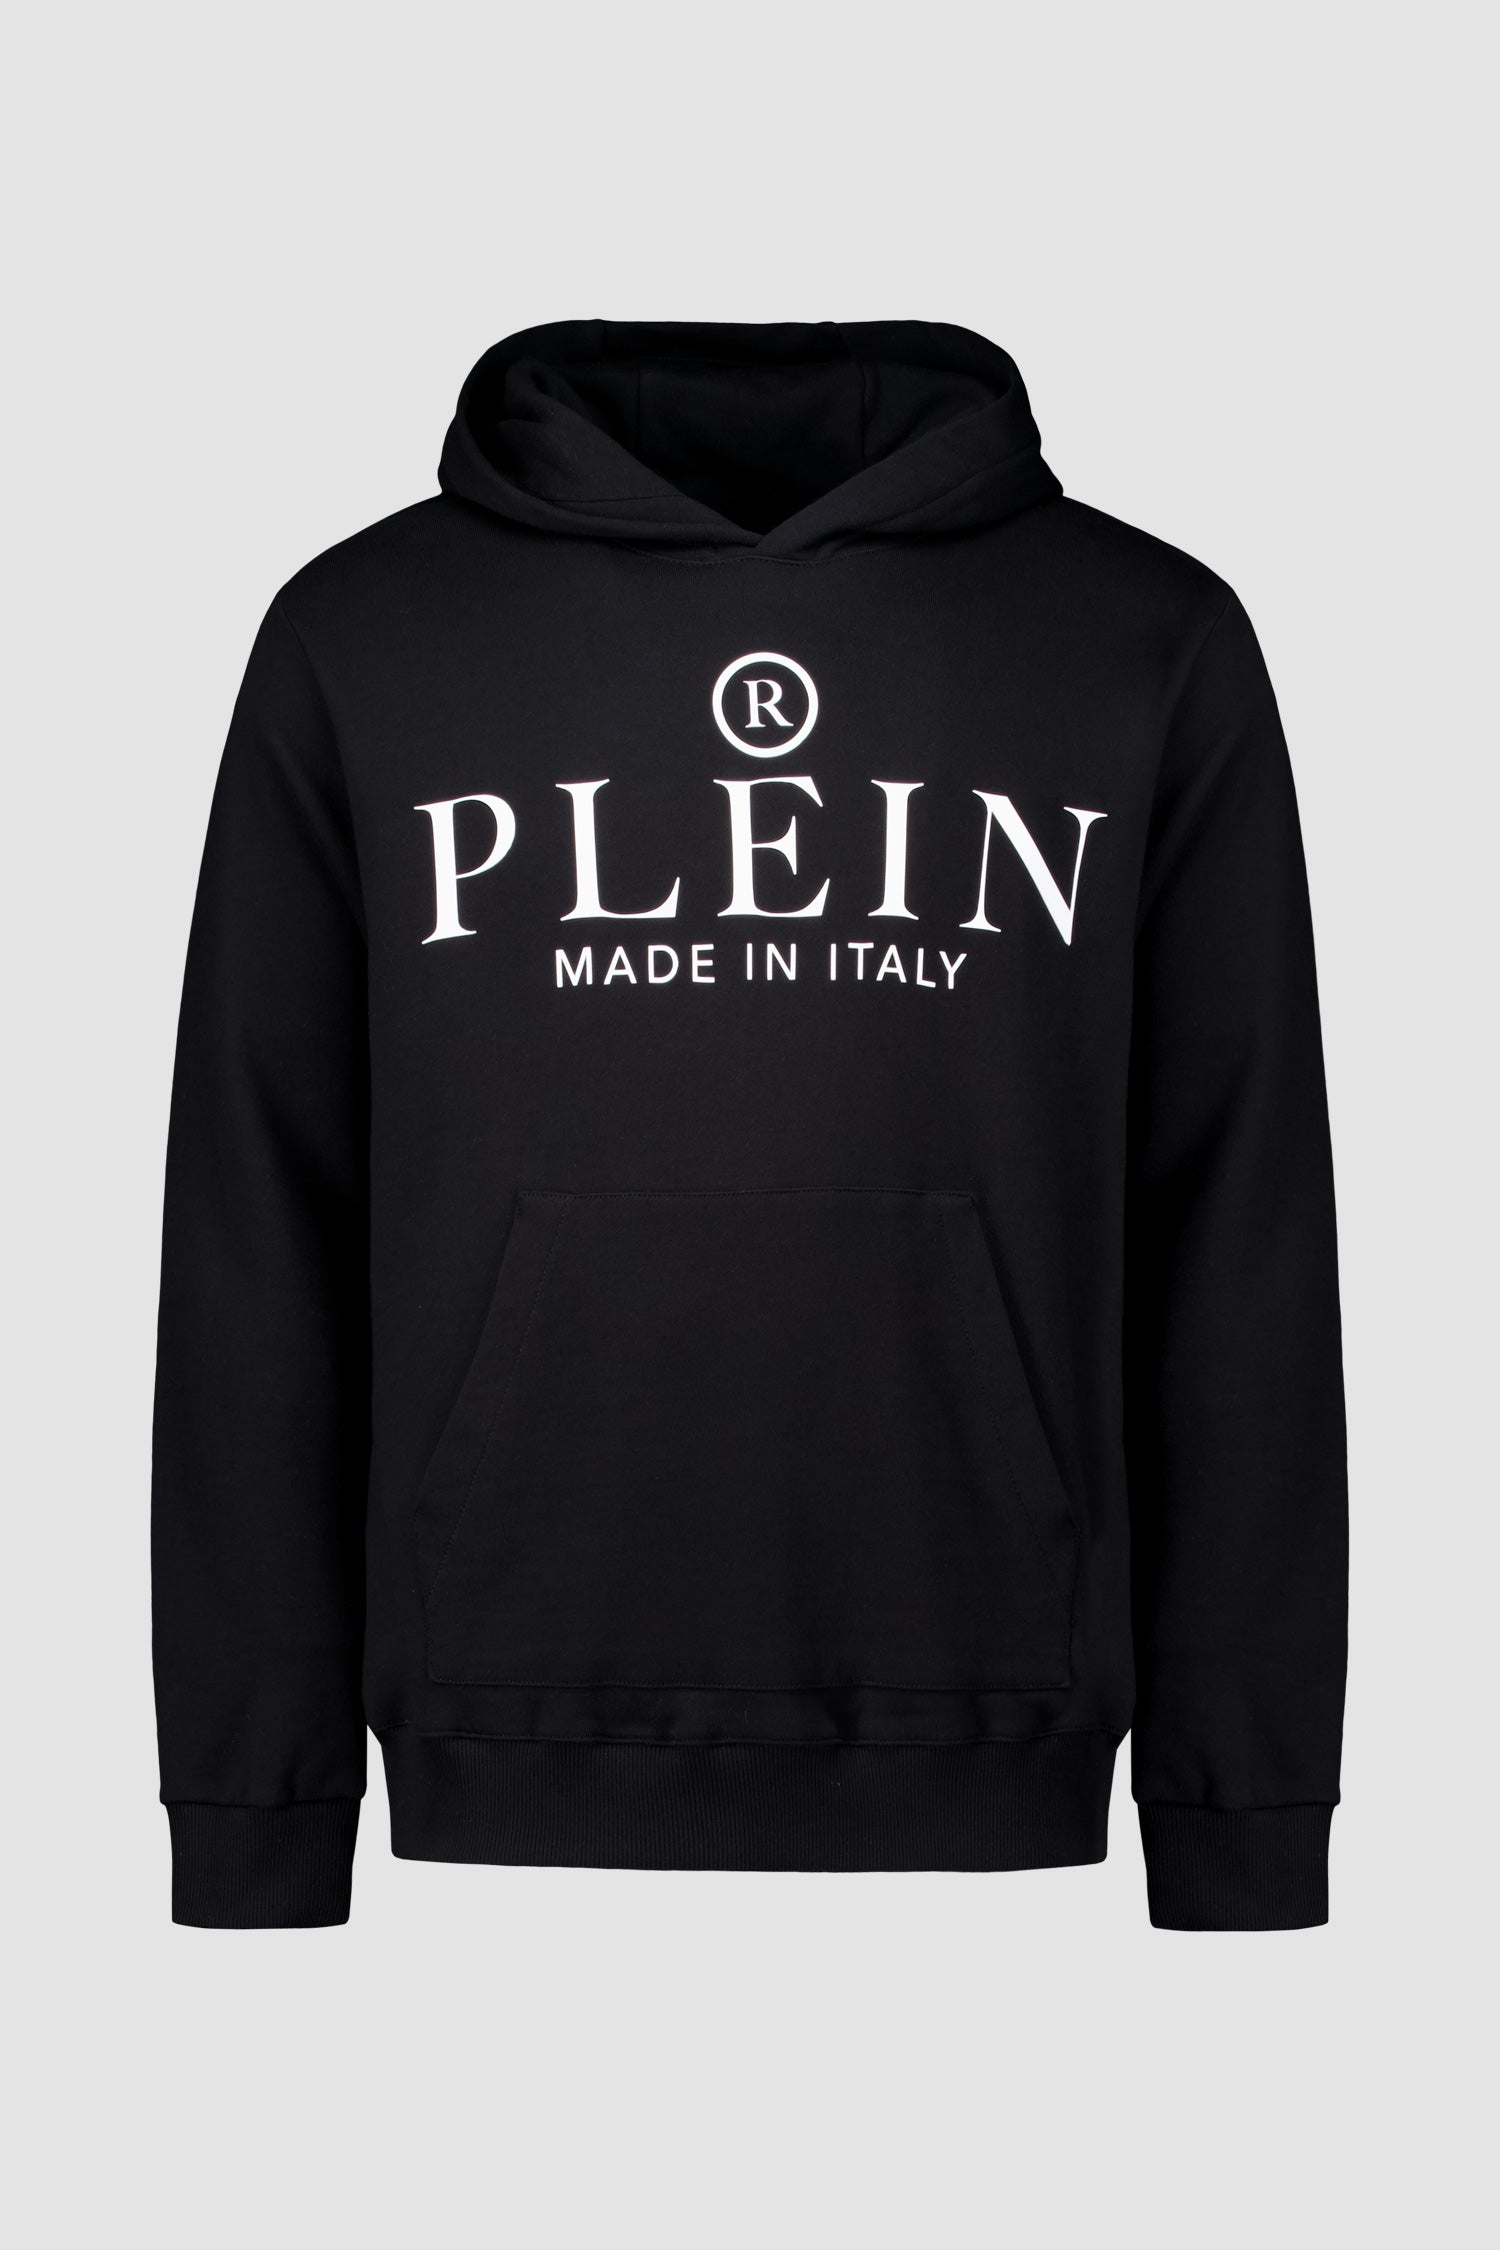 Philipp Plein Black Hoodie Sweatshirt